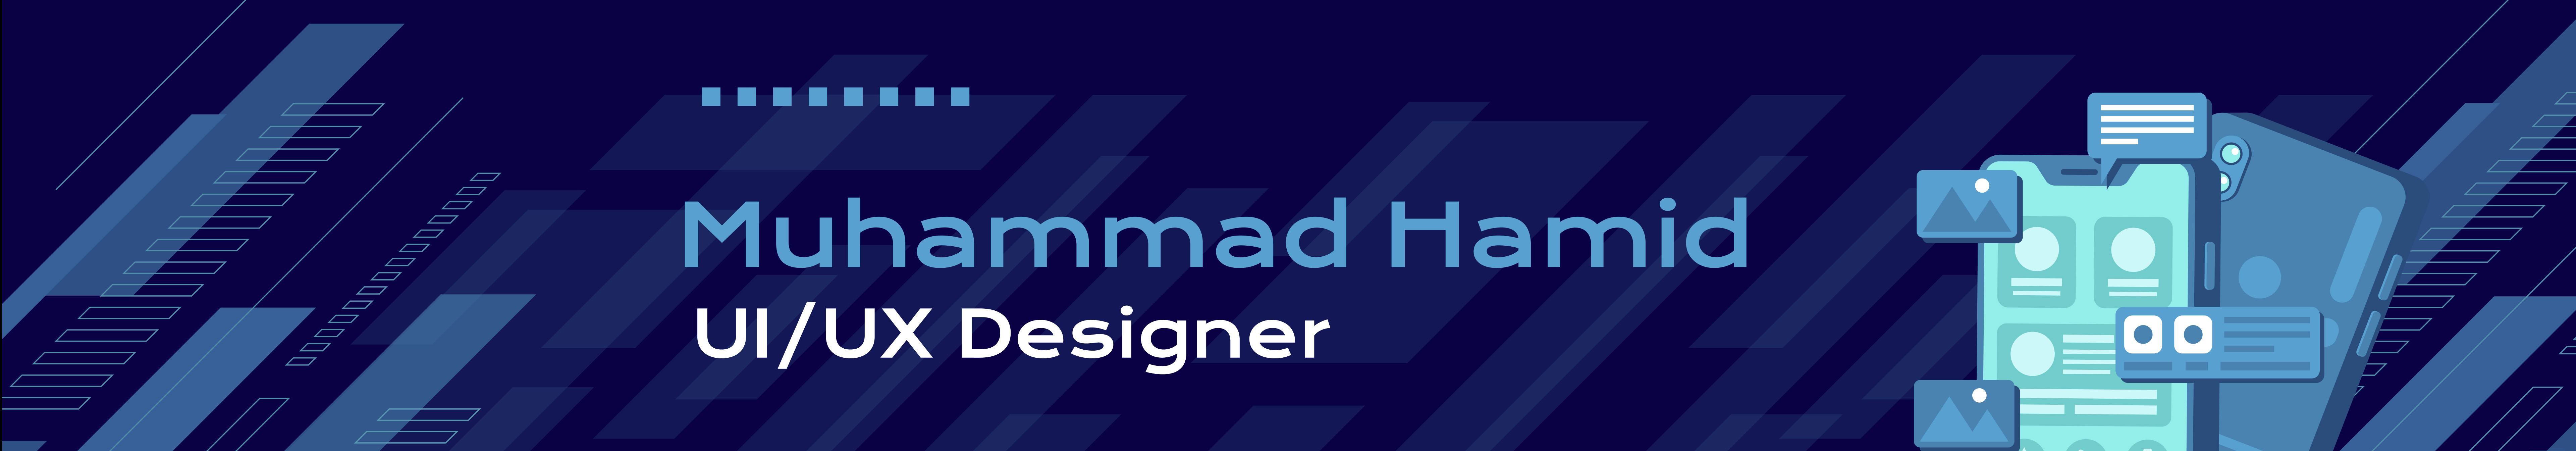 Muhammad Hamids profilbanner